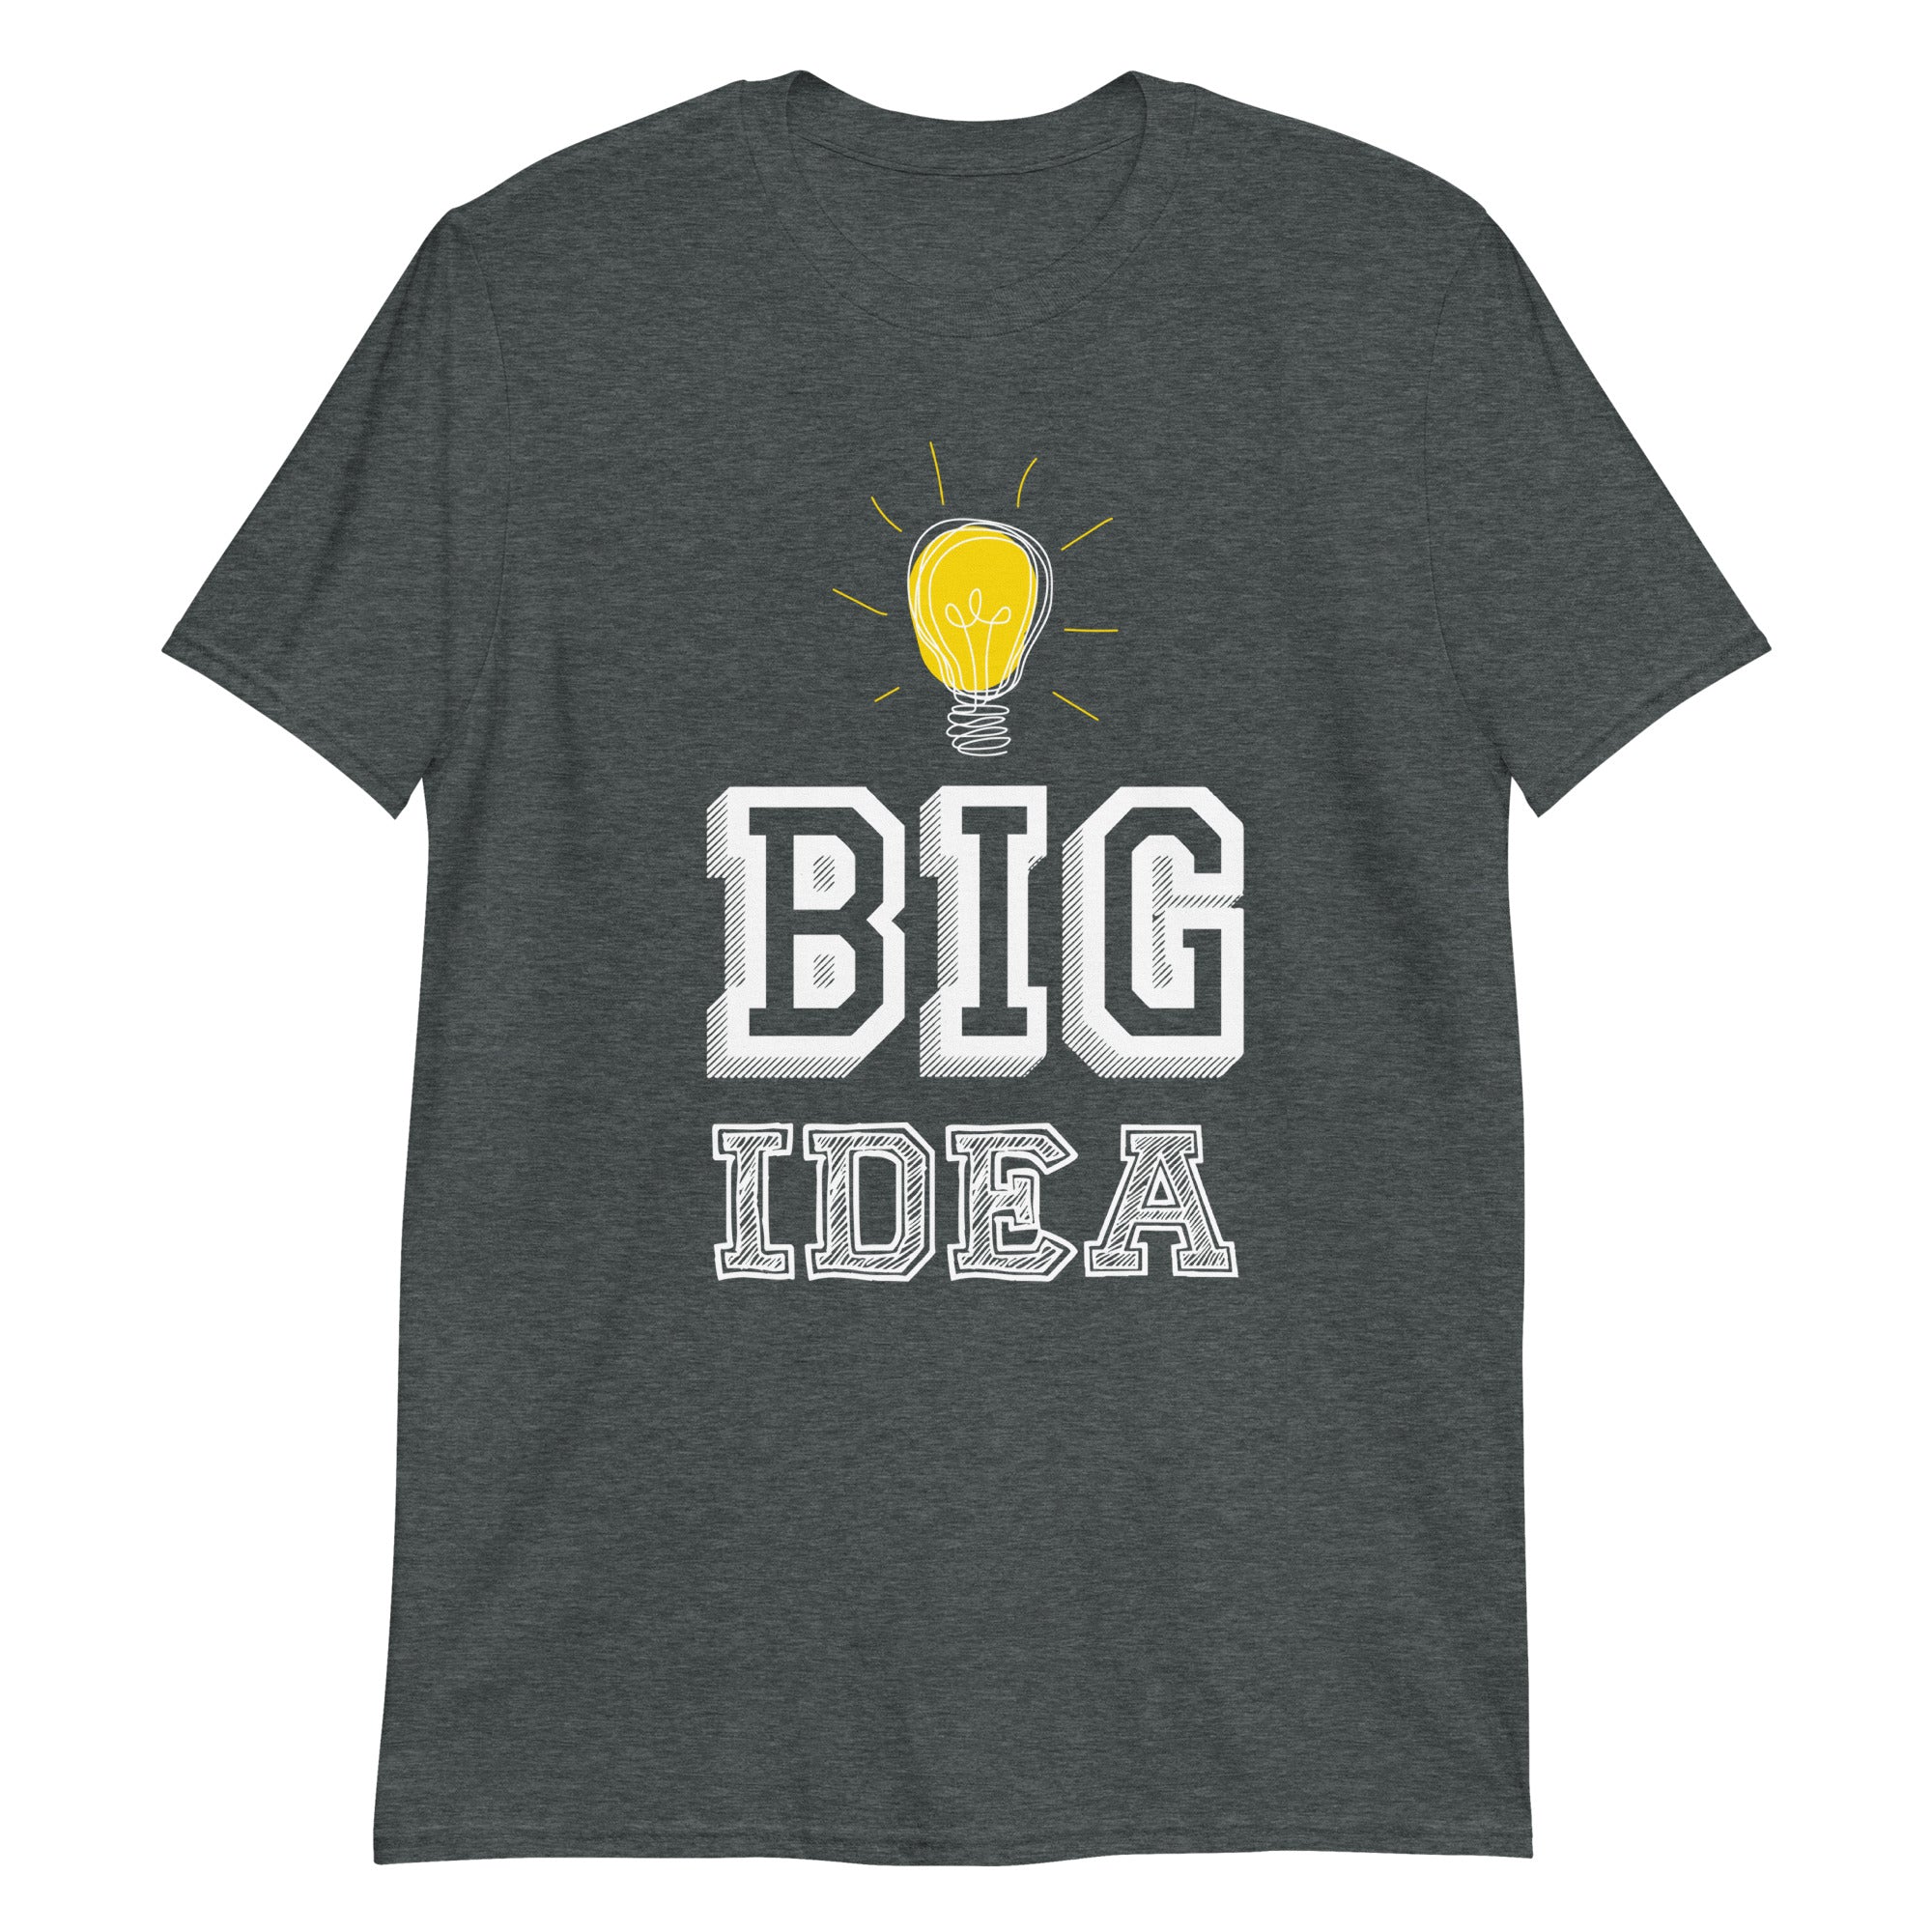 Big Idea Unisex T-Shirt